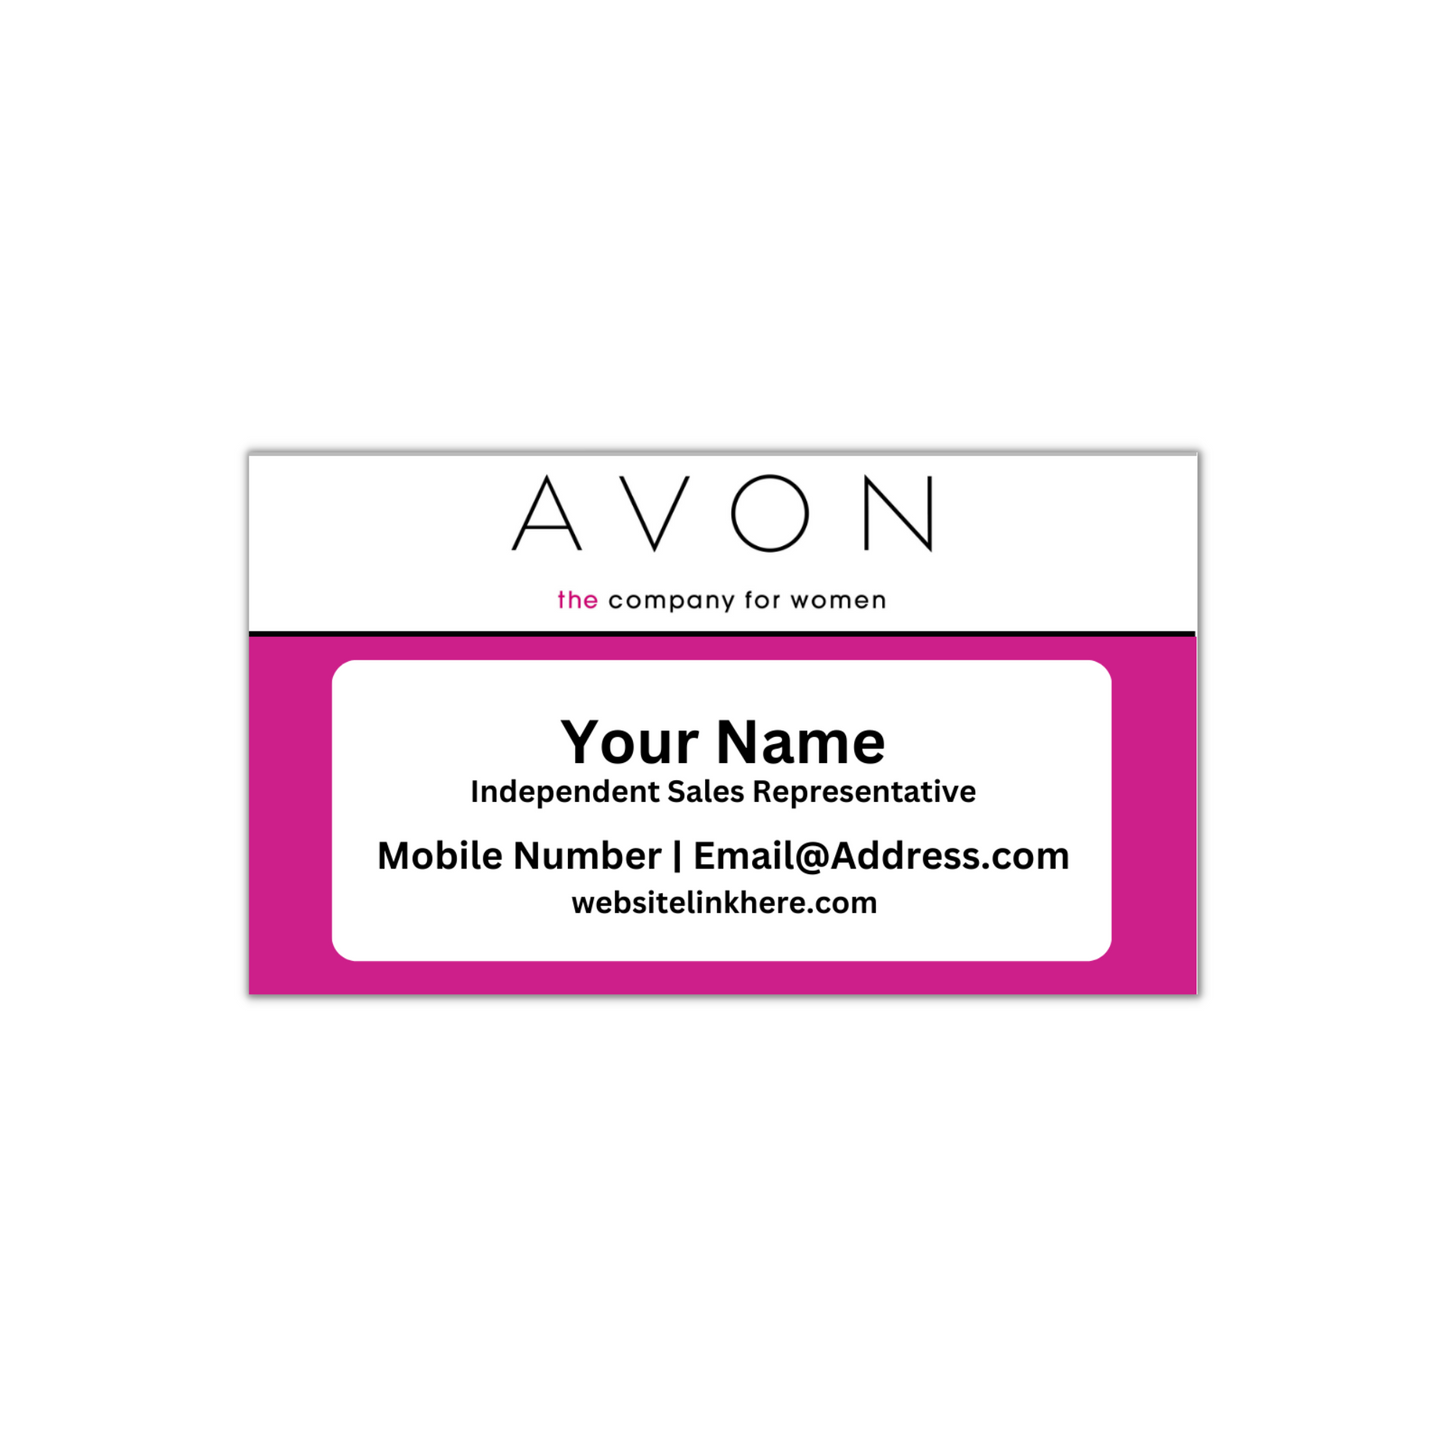 Avon Business Card - Independent Representatives / Network Marketing